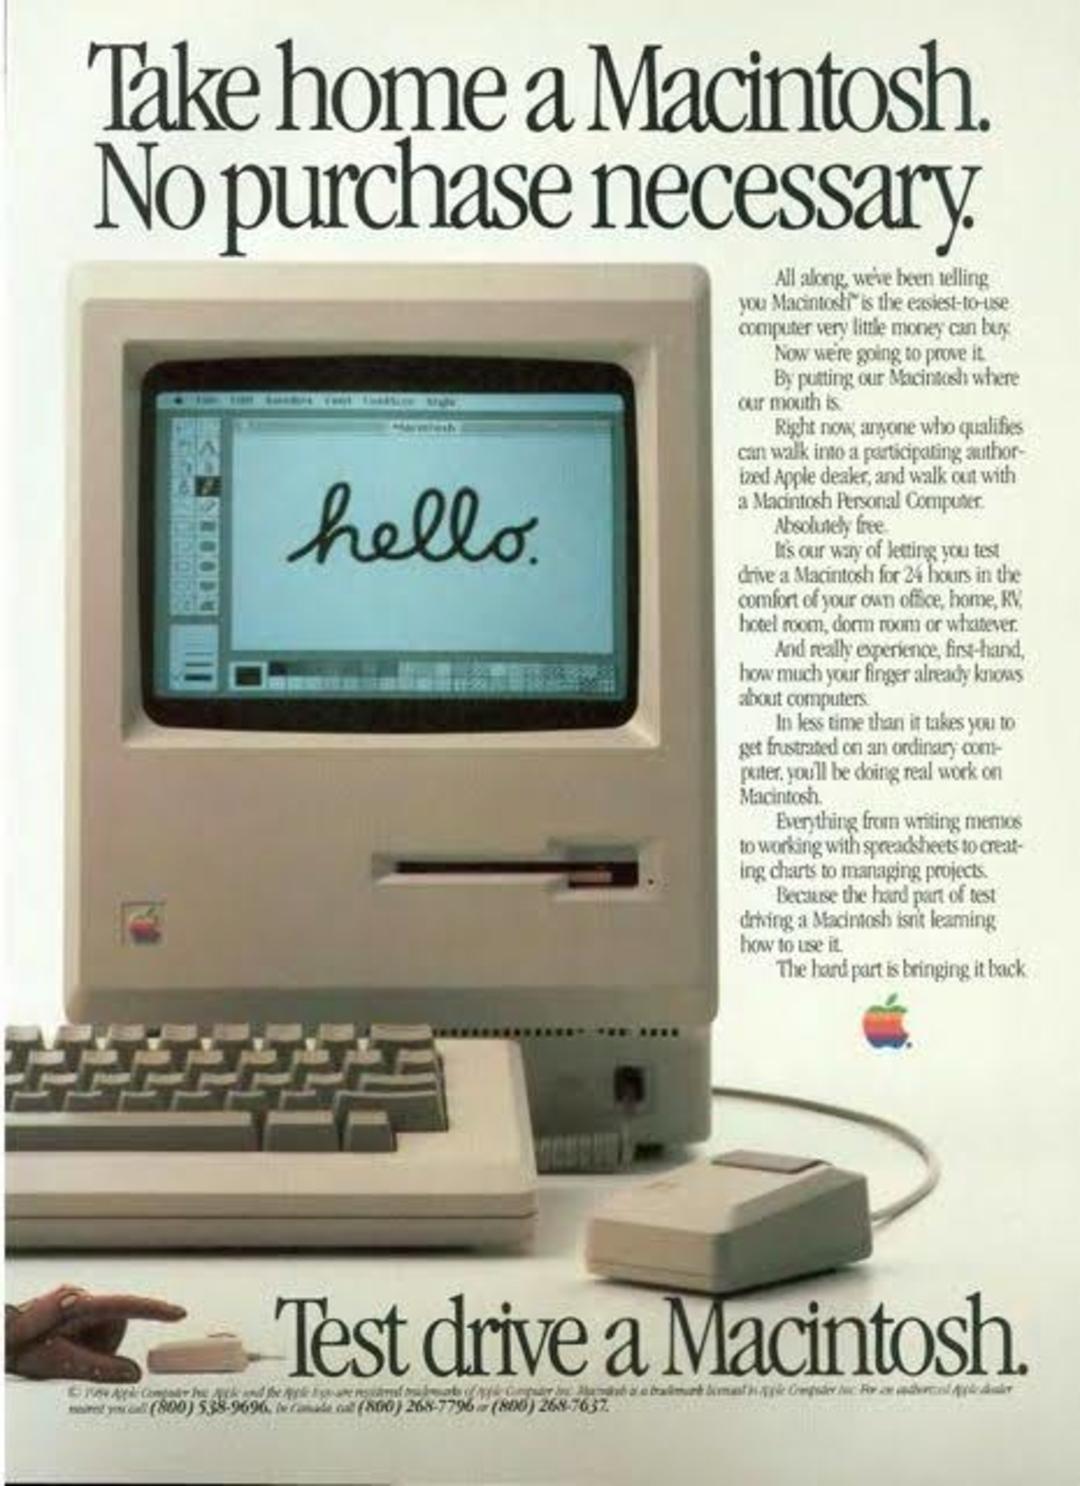 Test drive a Macintosh